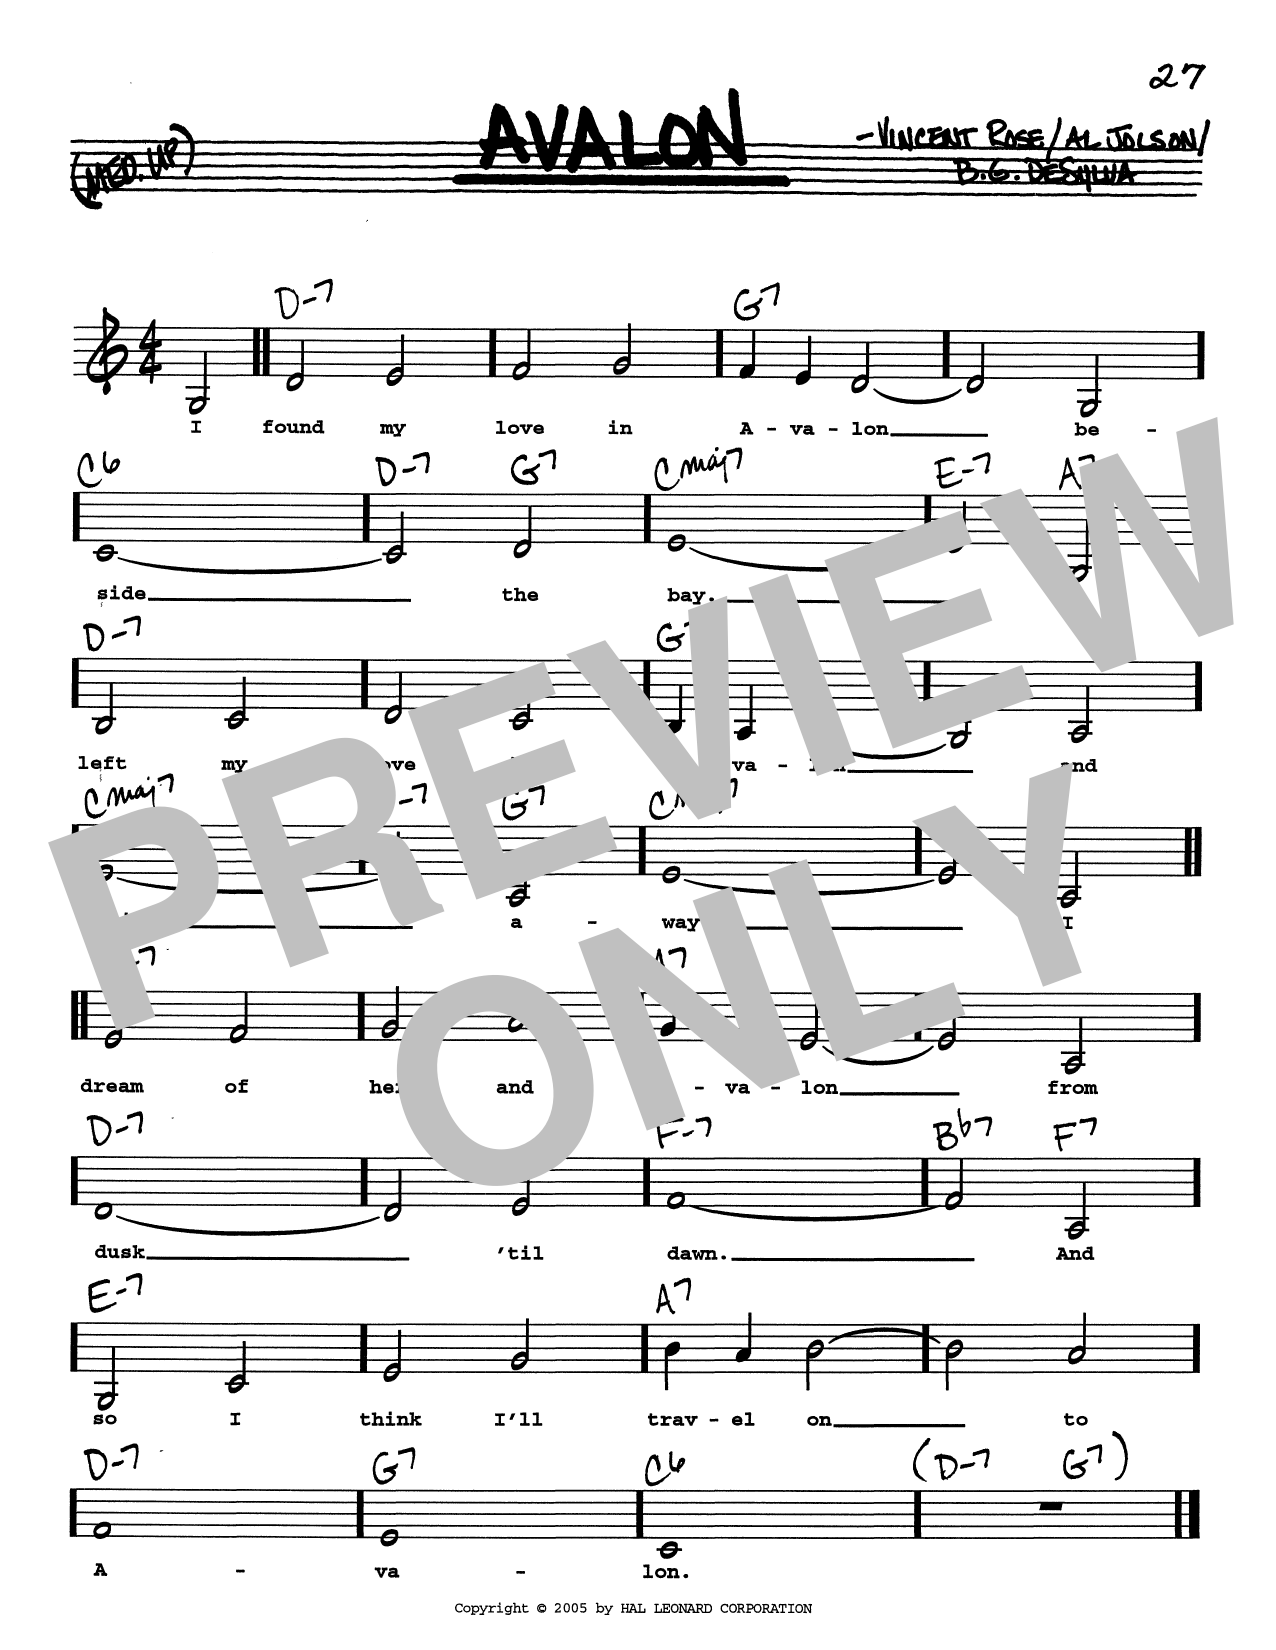 Al Jolson Avalon (Low Voice) sheet music notes printable PDF score